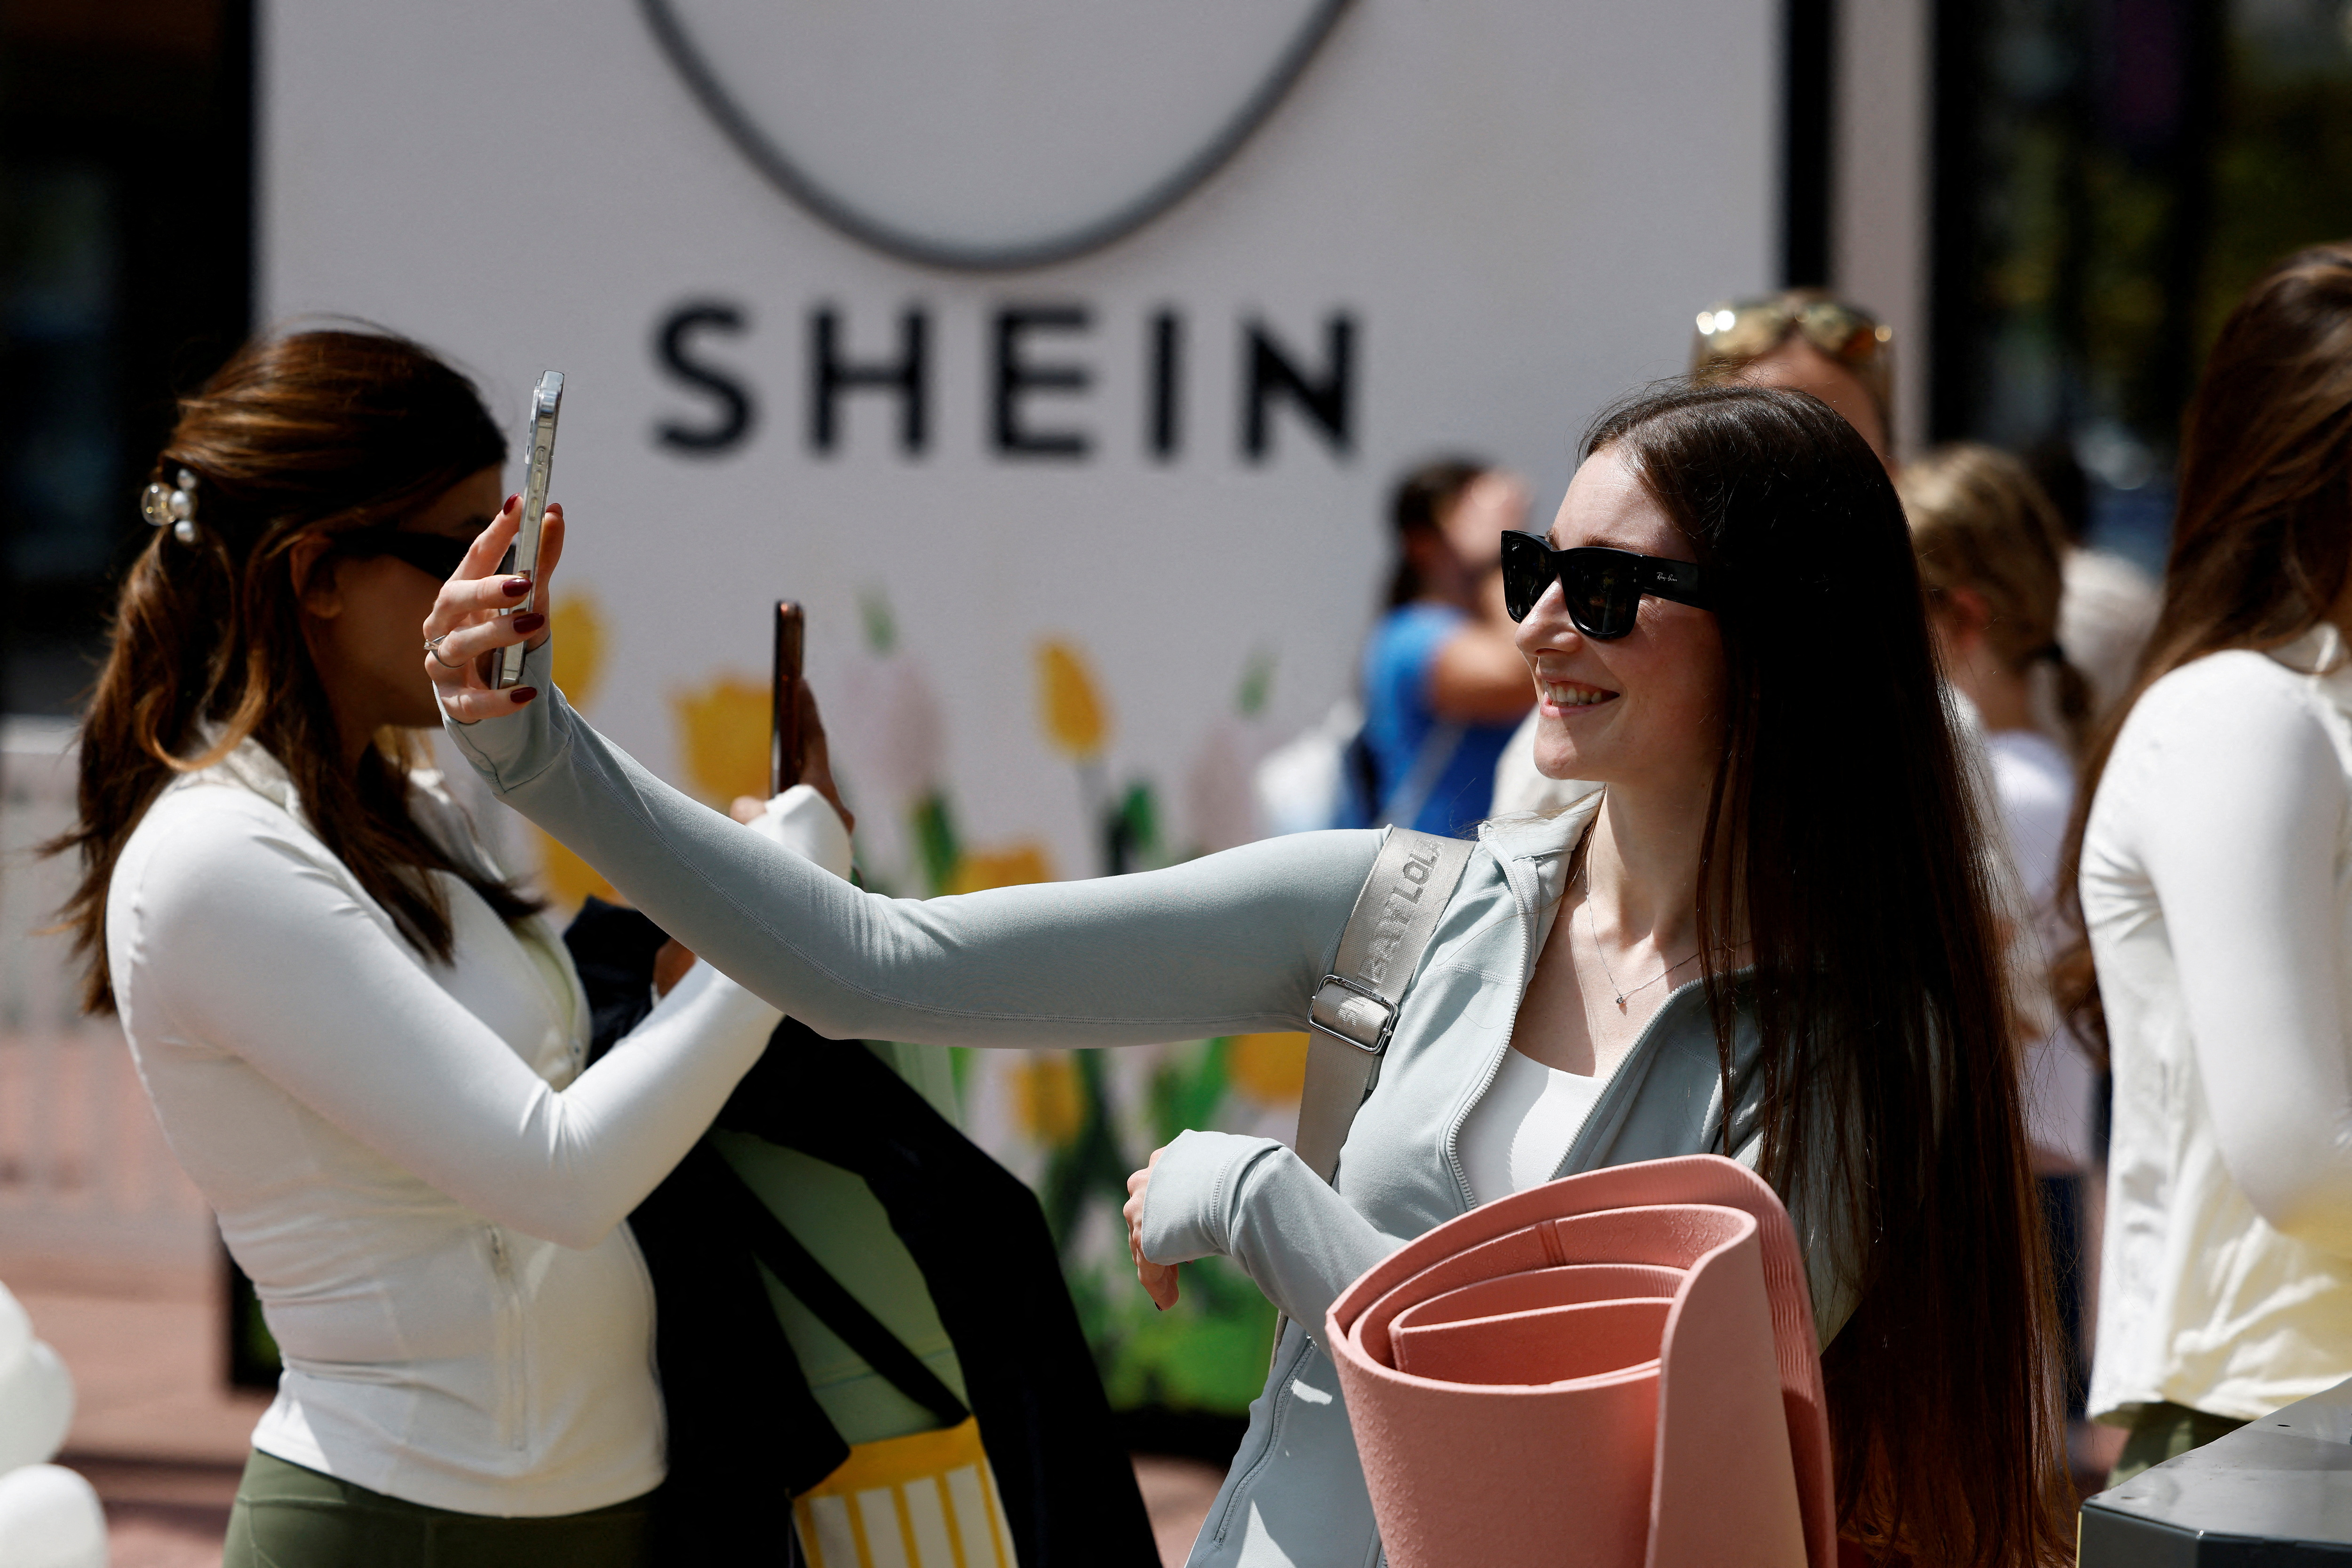 Fast-fashion brand Shein opens a pop-up store in Ottawa